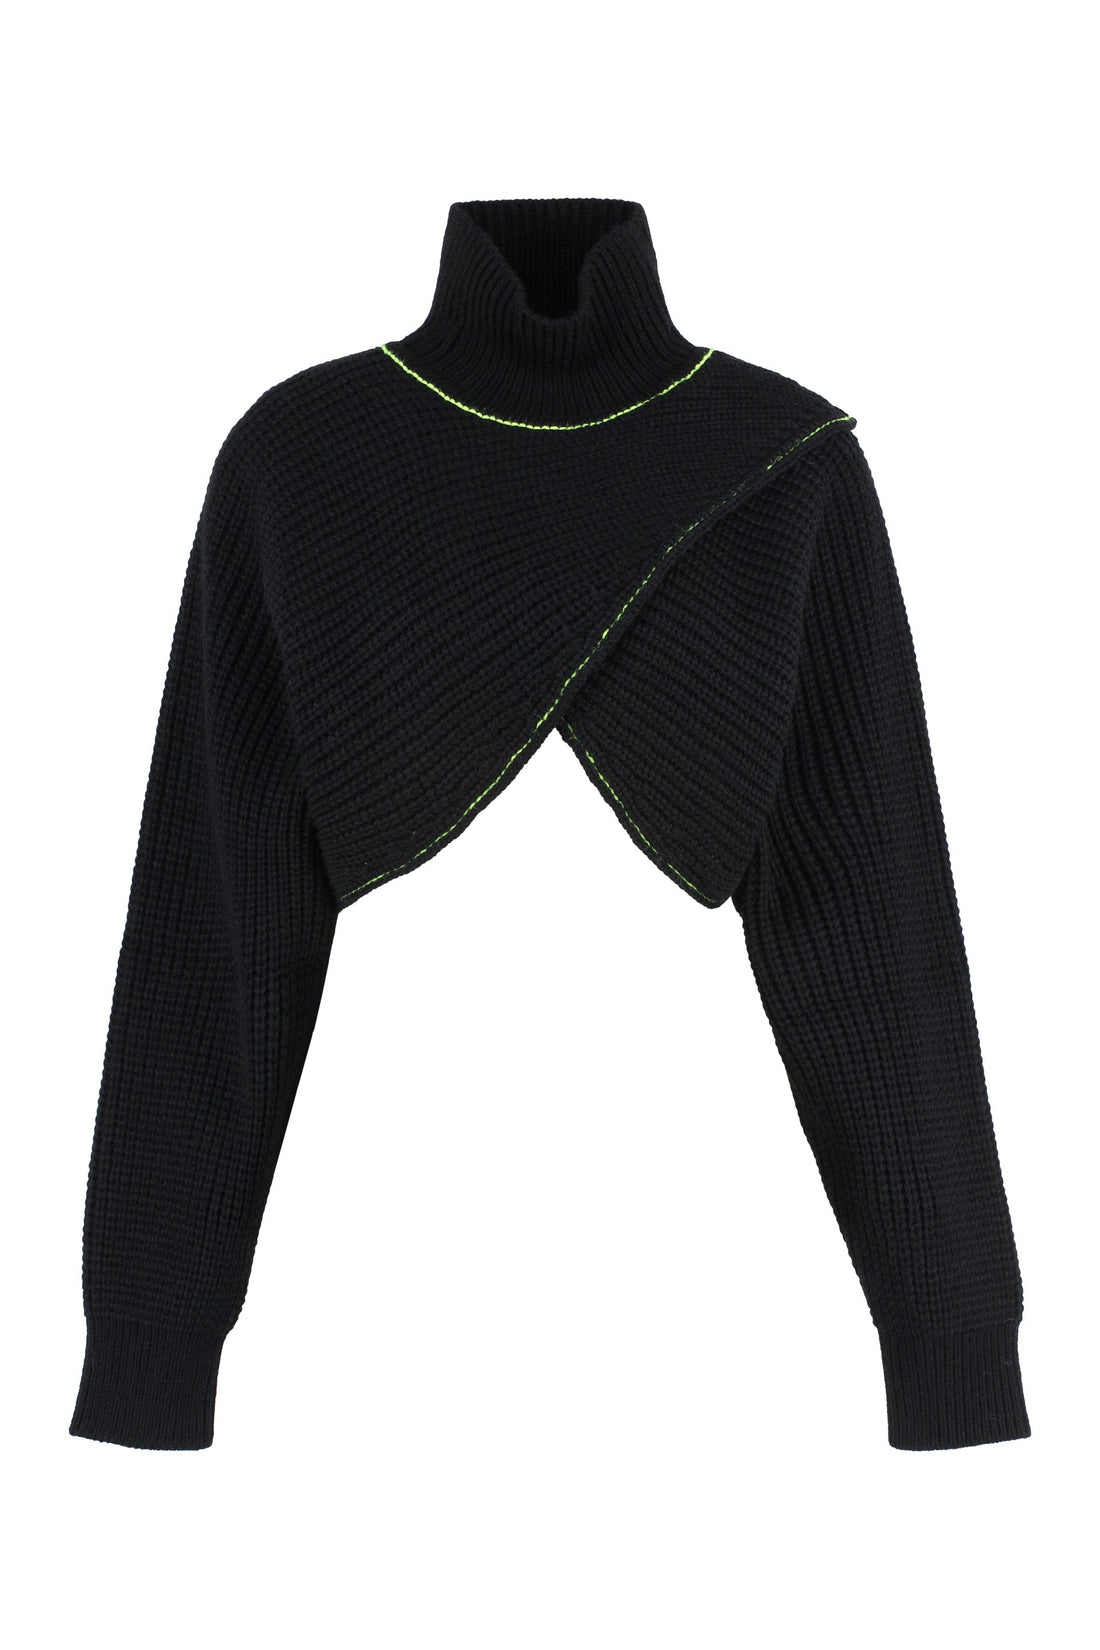 MSGM-OUTLET-SALE-Ribbed turtleneck sweater-ARCHIVIST